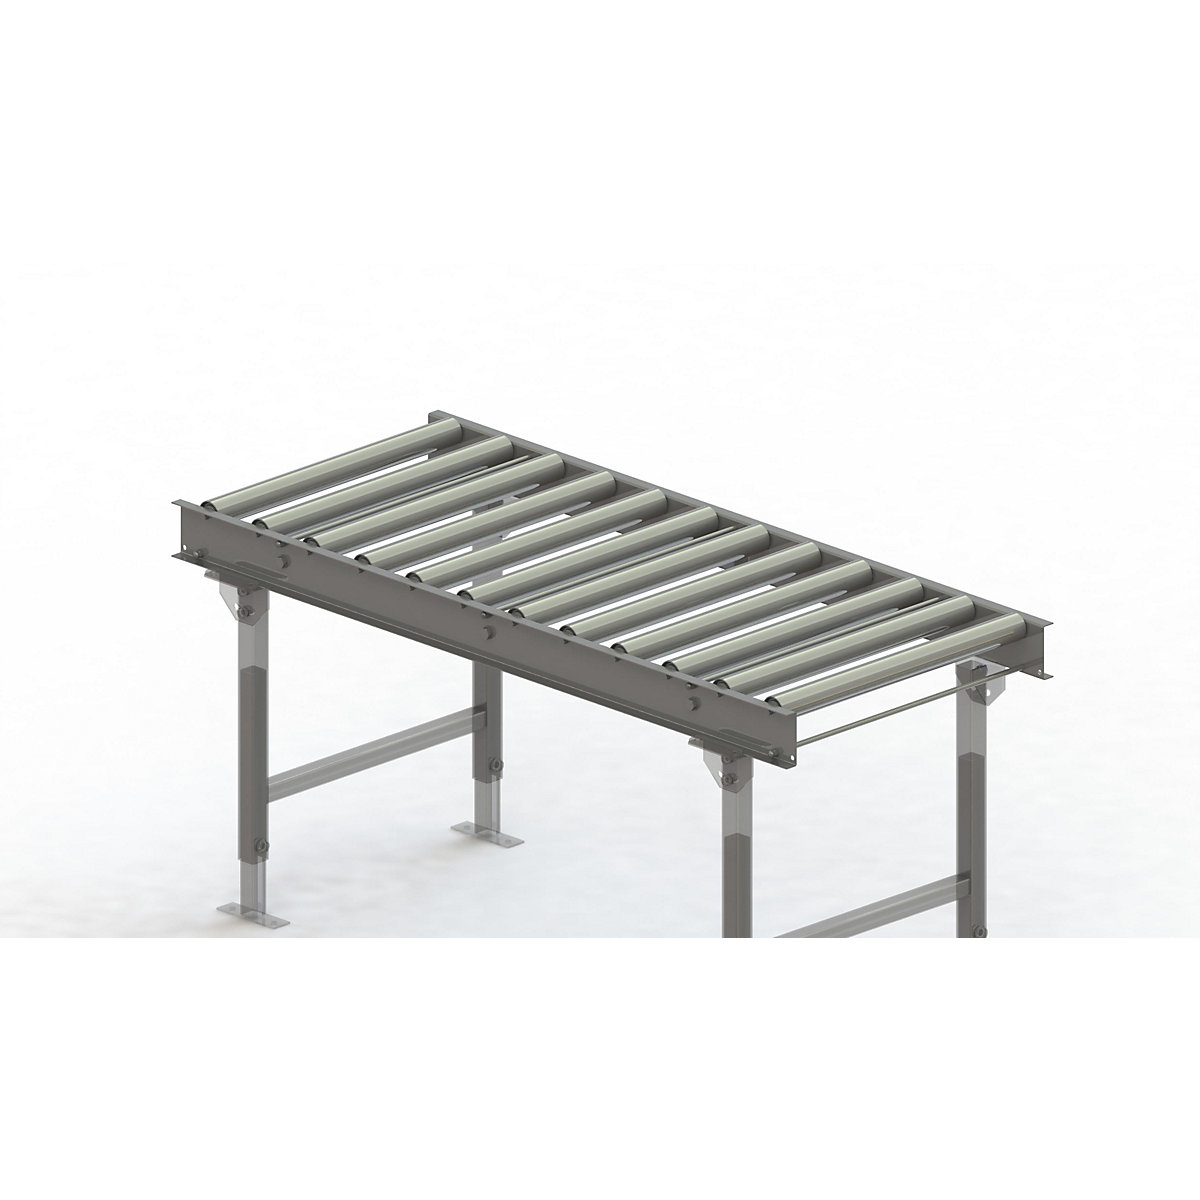 Gura – Roller conveyor, steel frame with zinc plated steel rollers, track width 600 mm, distance between axles 125 mm, length 1.5 m